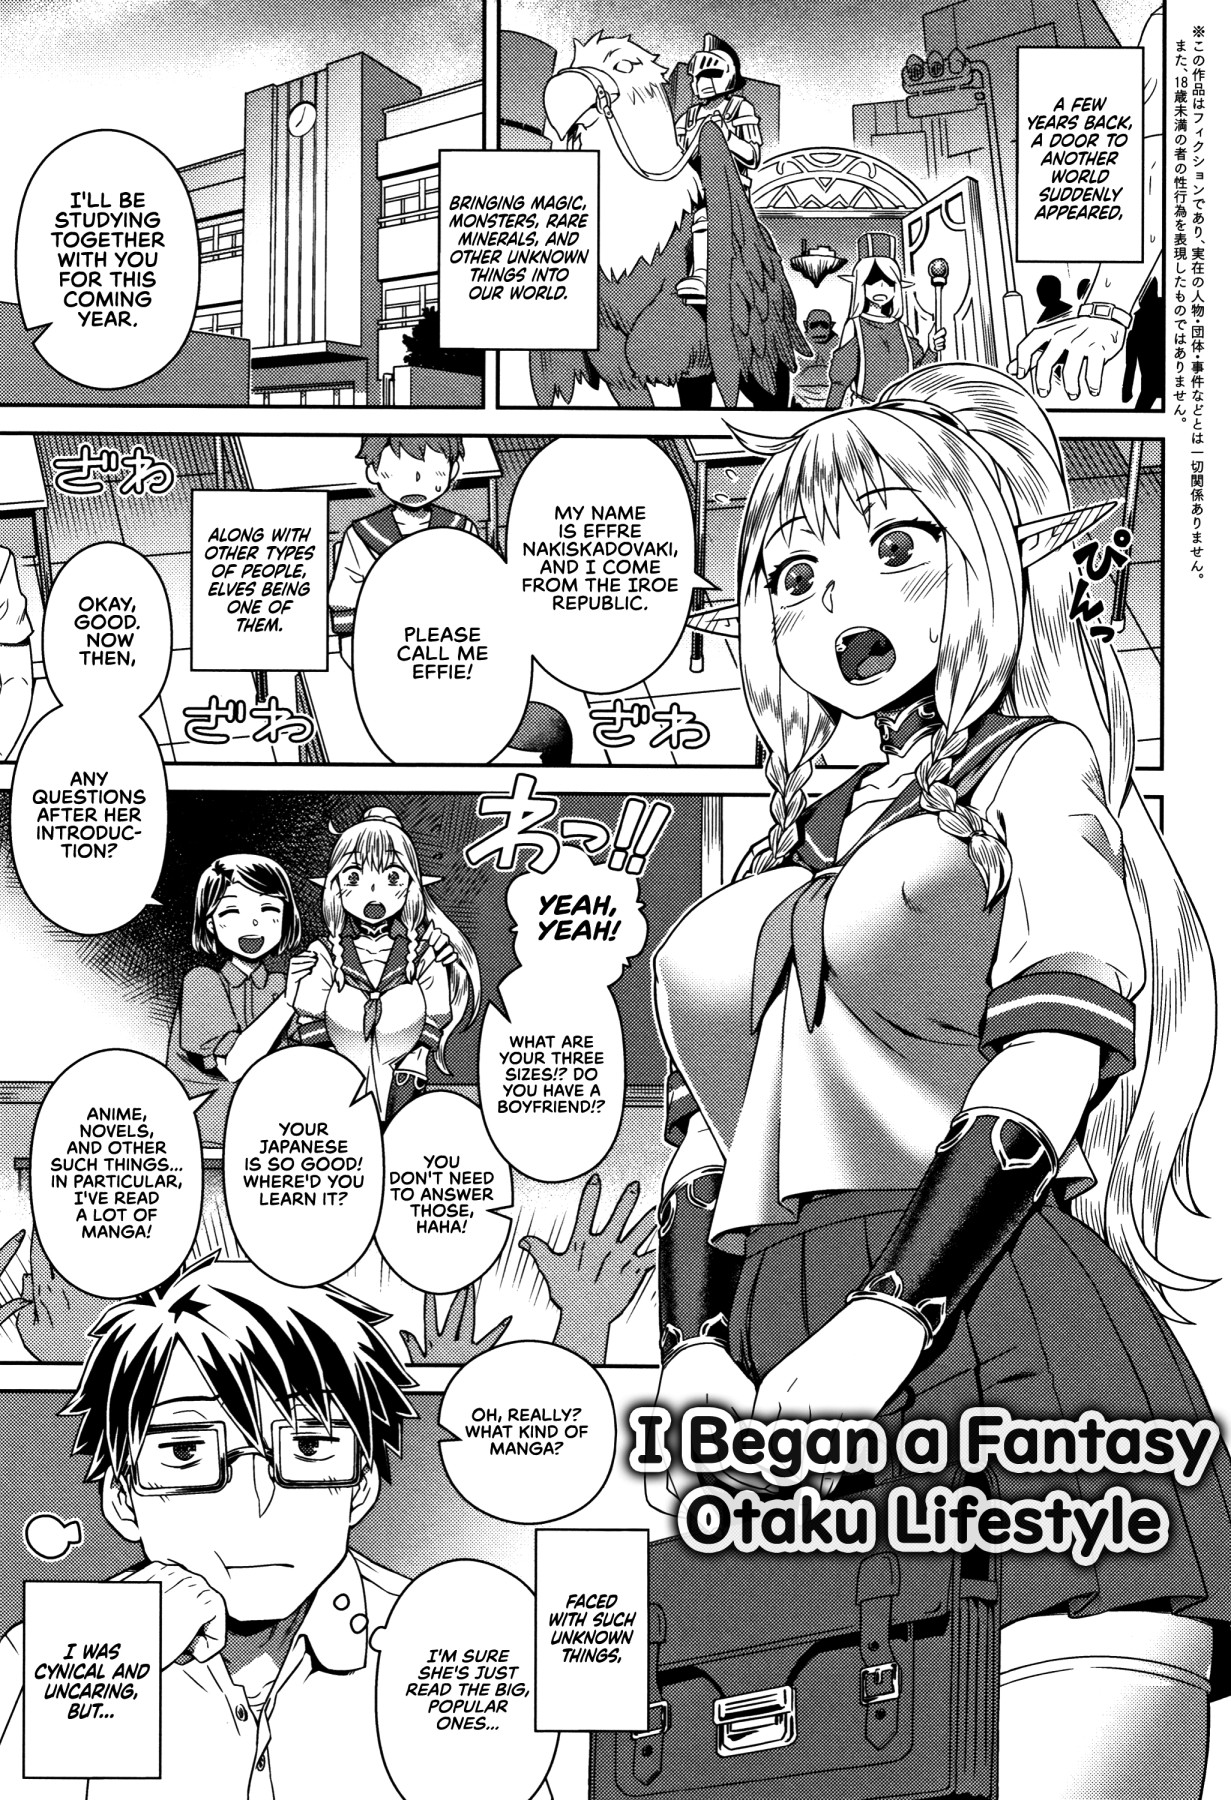 Hentai Manga Comic-I Began a Fantasy Otaku Lifestyle-Read-1